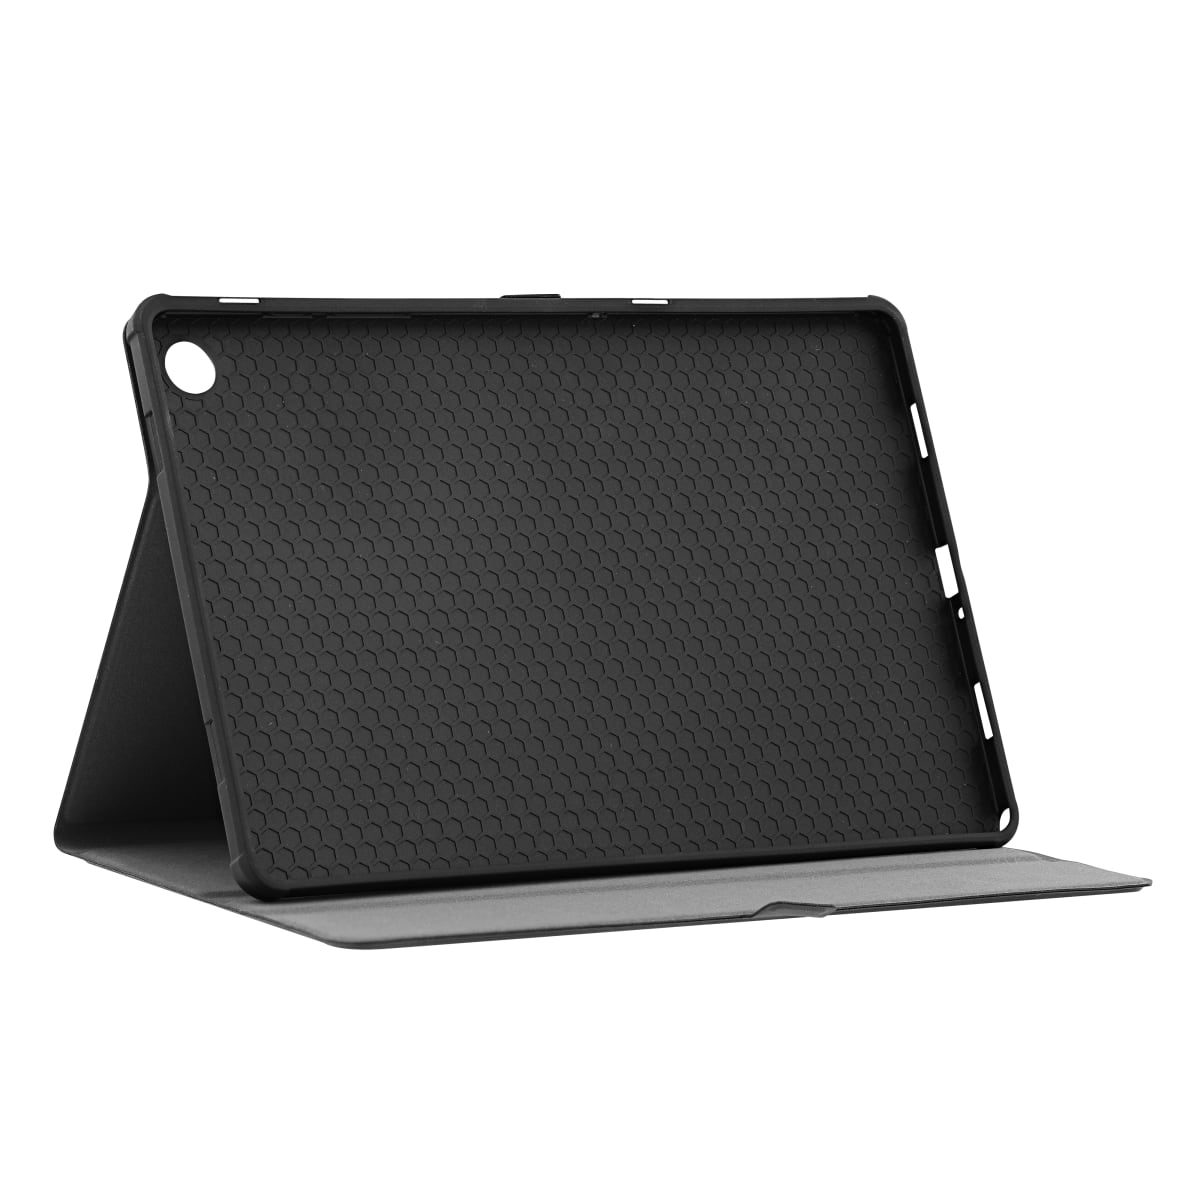  folio case for SAMSUNG A9+ tablet black